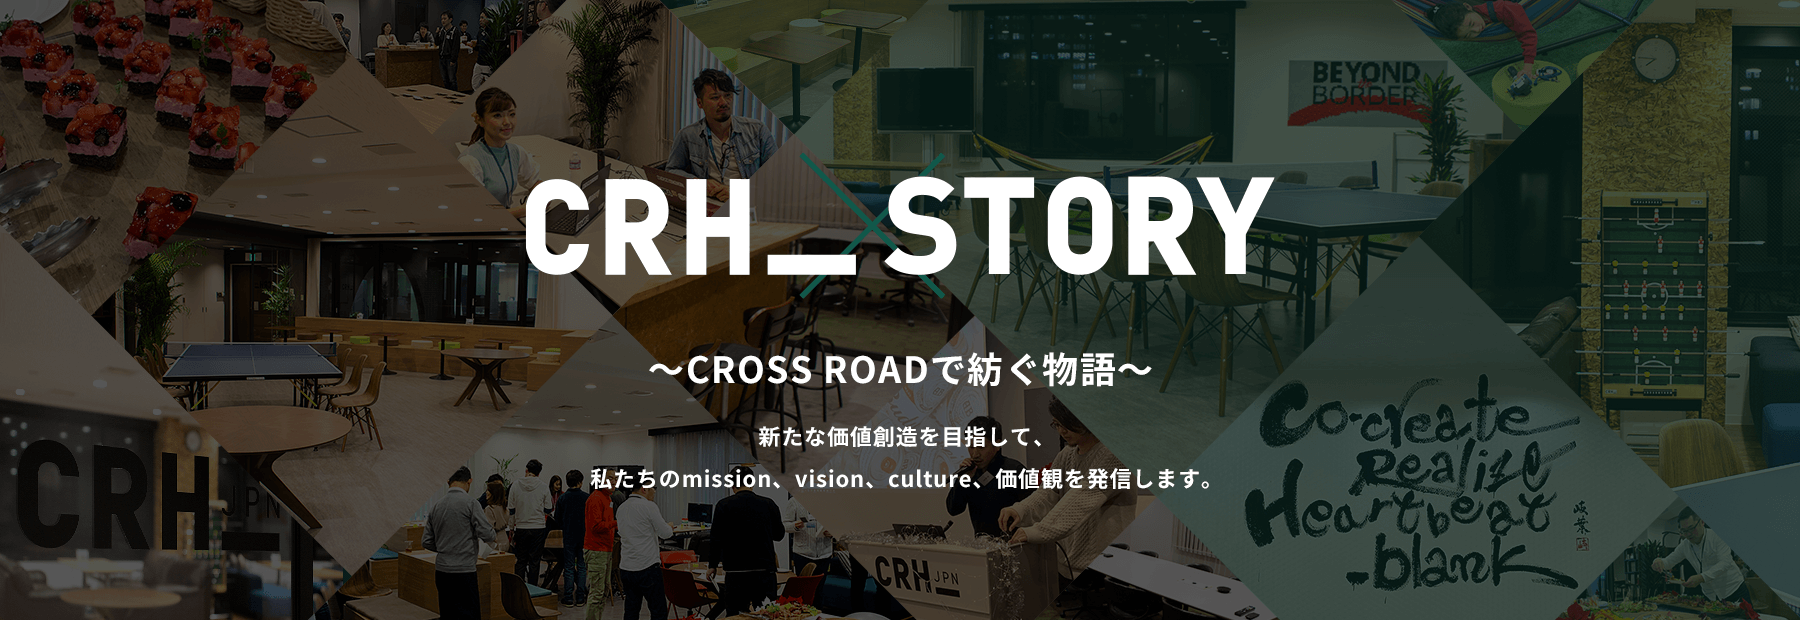 CRH_STORY ～CROSS ROADで紡ぐ物語～ 新たな価値創造を目指して、私たちのmission、vision、culture、価値観を発信します。